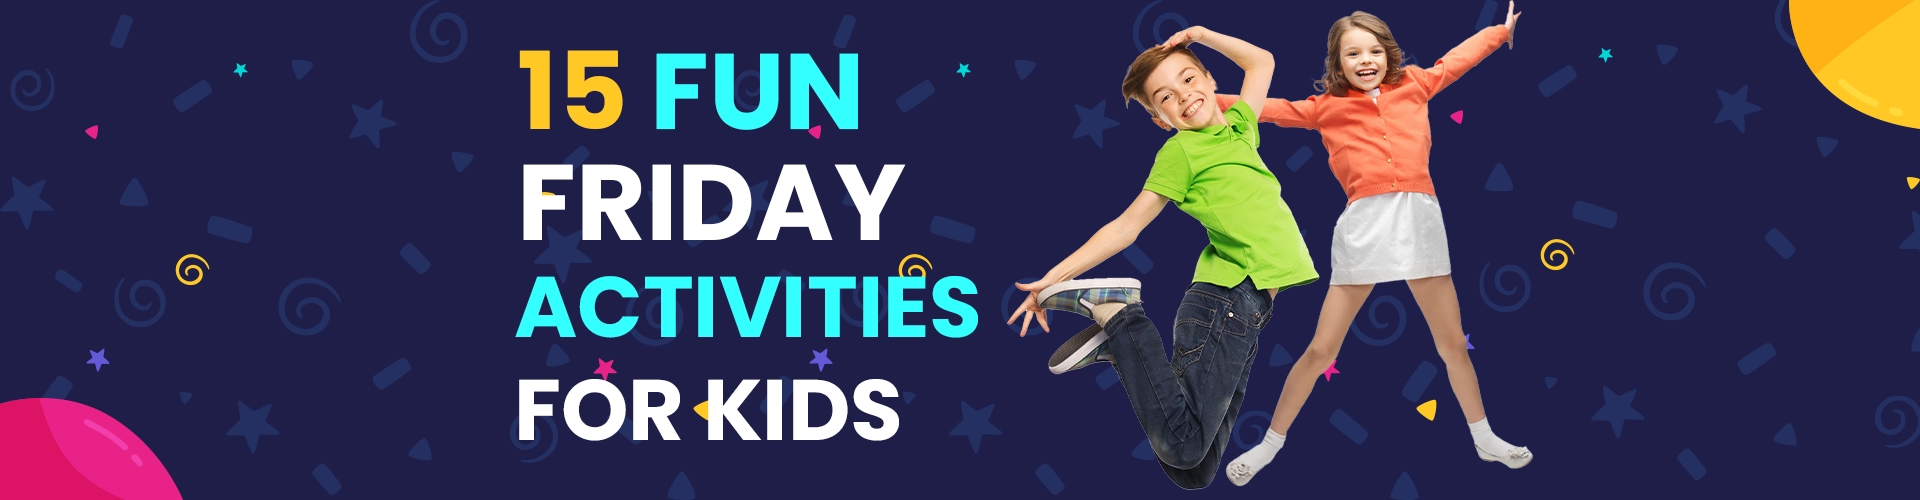 Fun Friday Activities for Kids